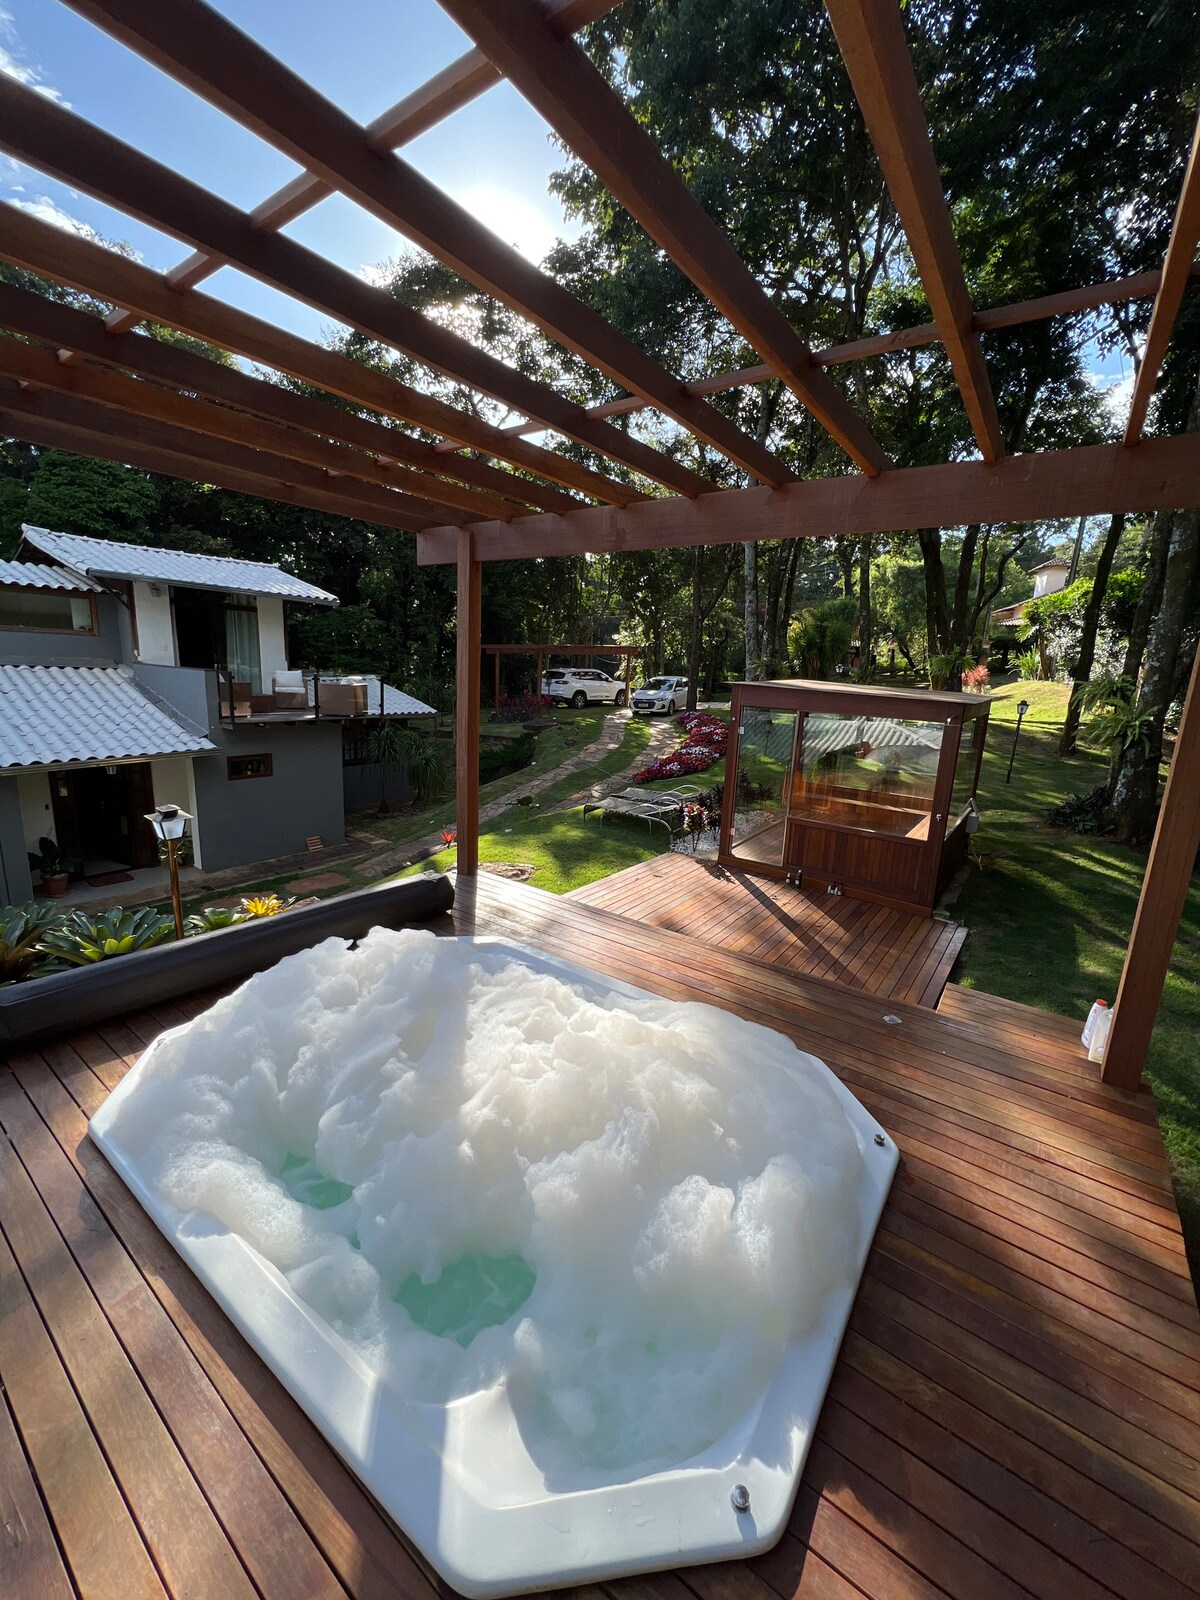 Spa, sauna, piscina natural em condomínio de luxo!